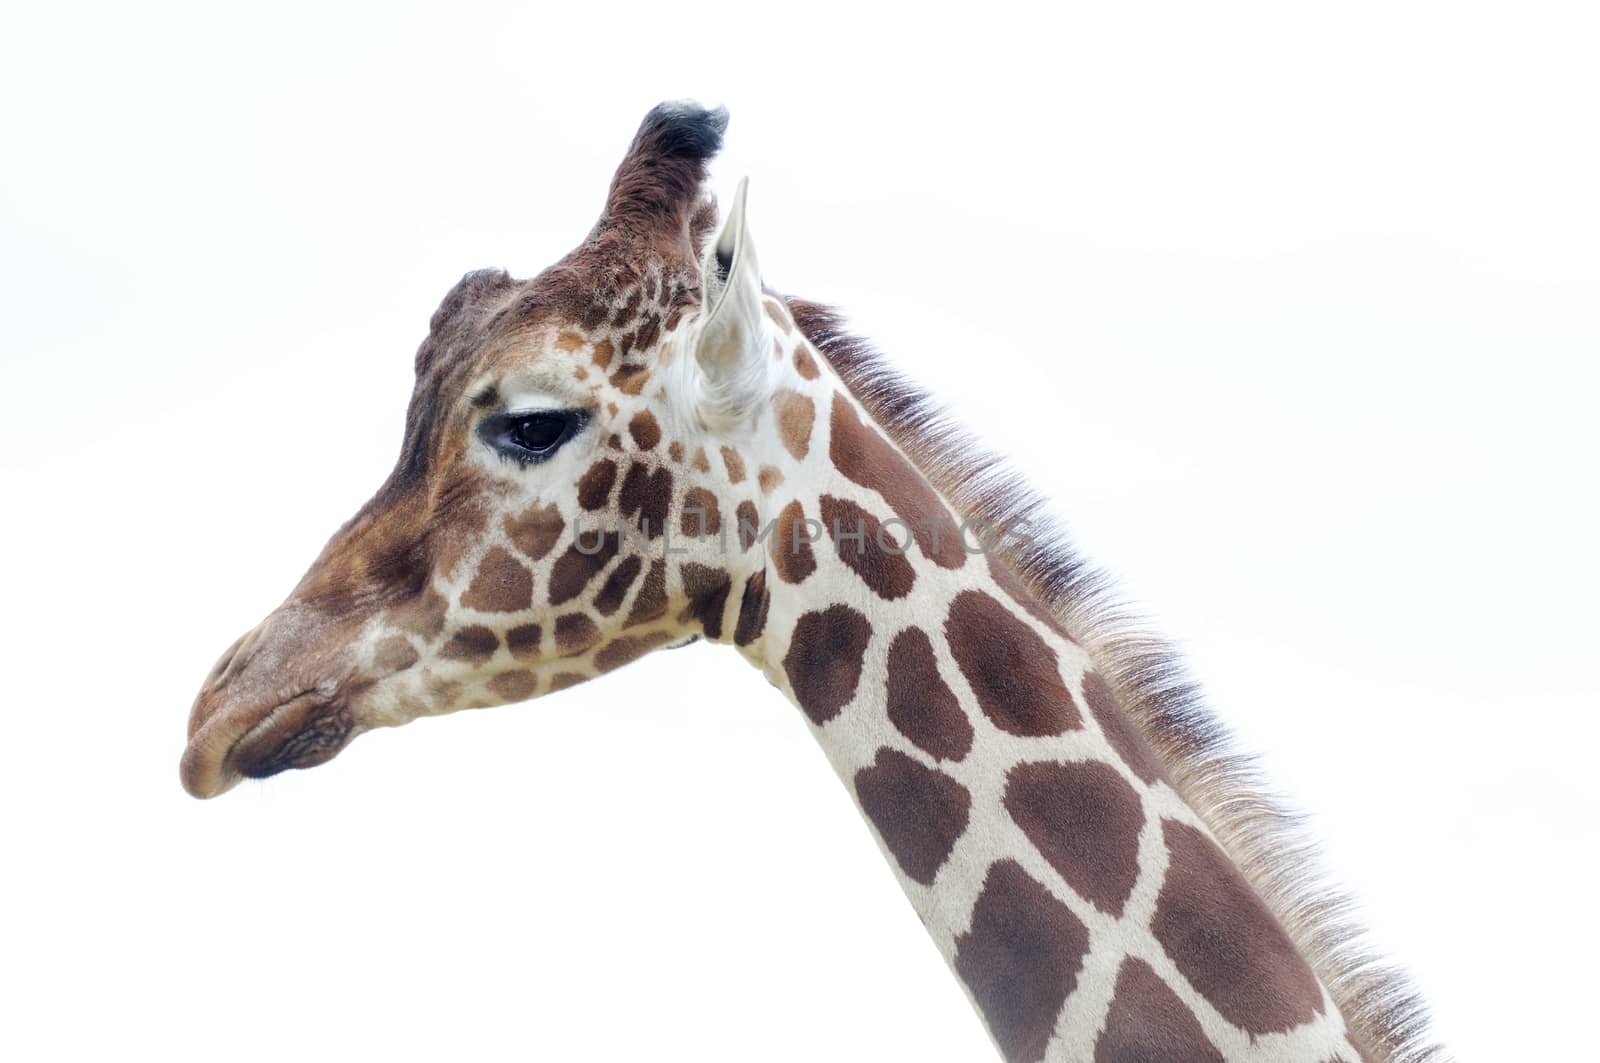 Giraffe head by kmwphotography